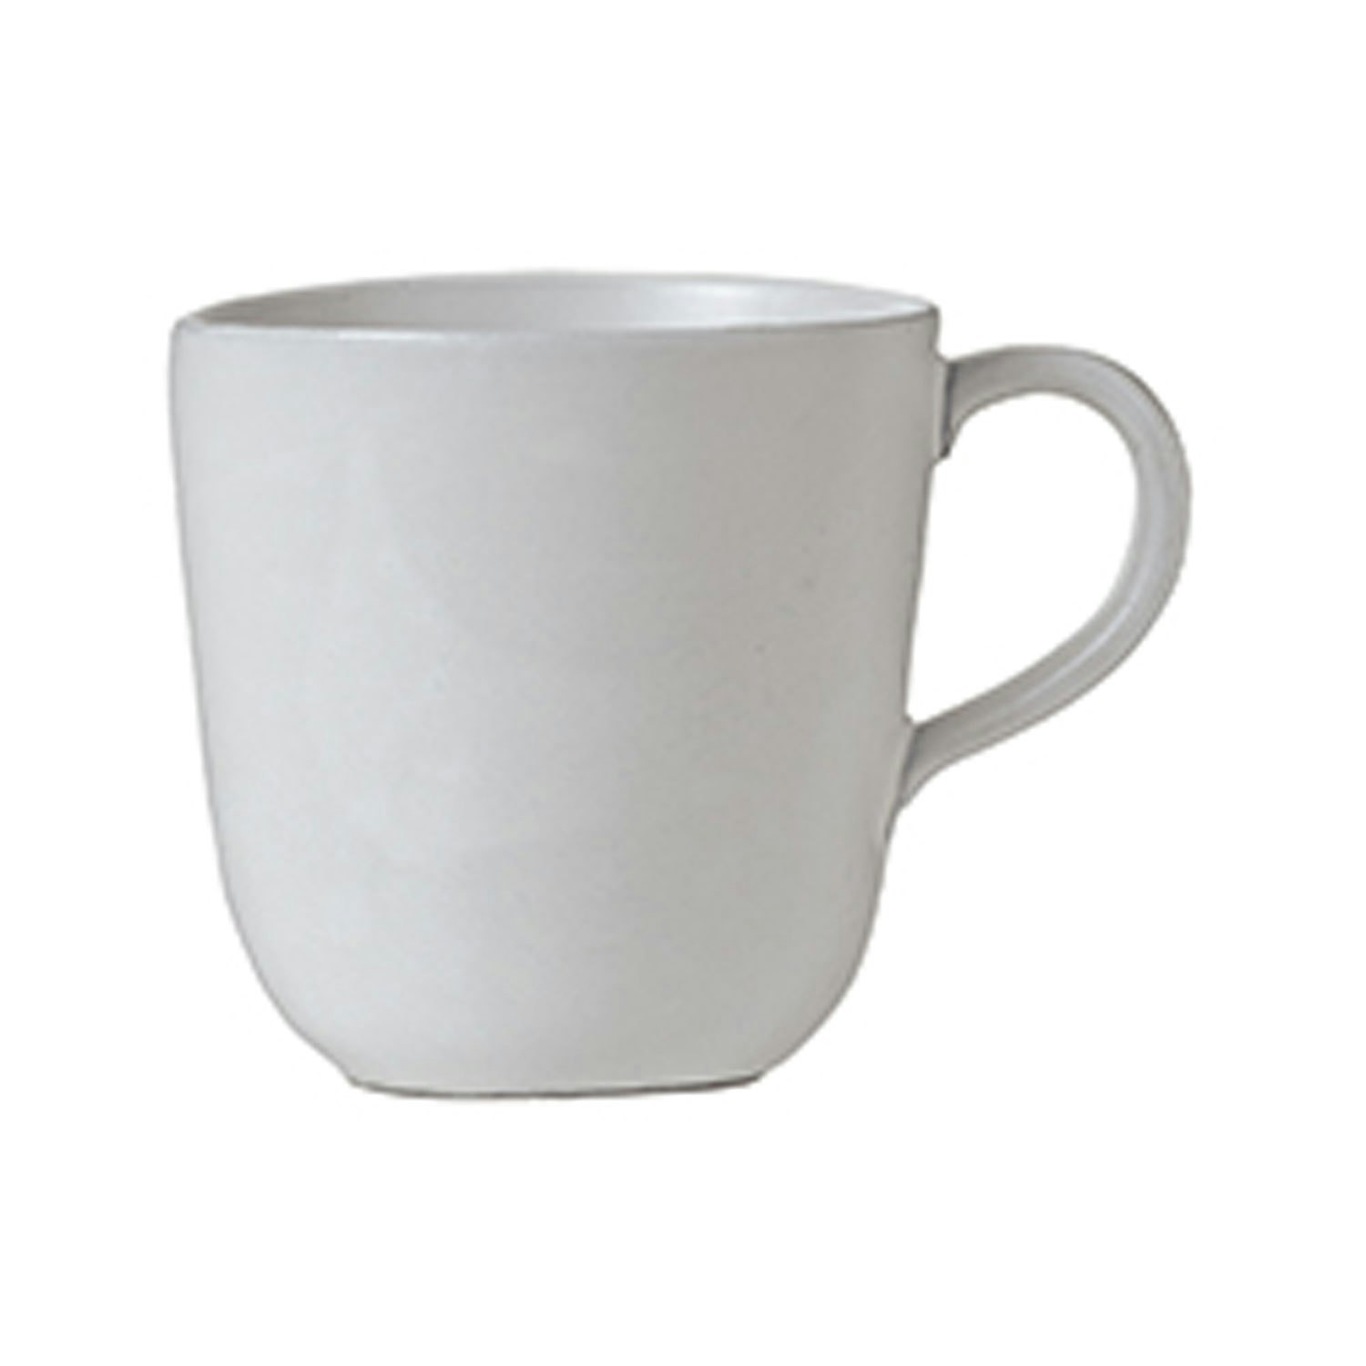 Raw Coffee Mug - 20 With Handle Aida cl, RoyalDesign Arctic White 